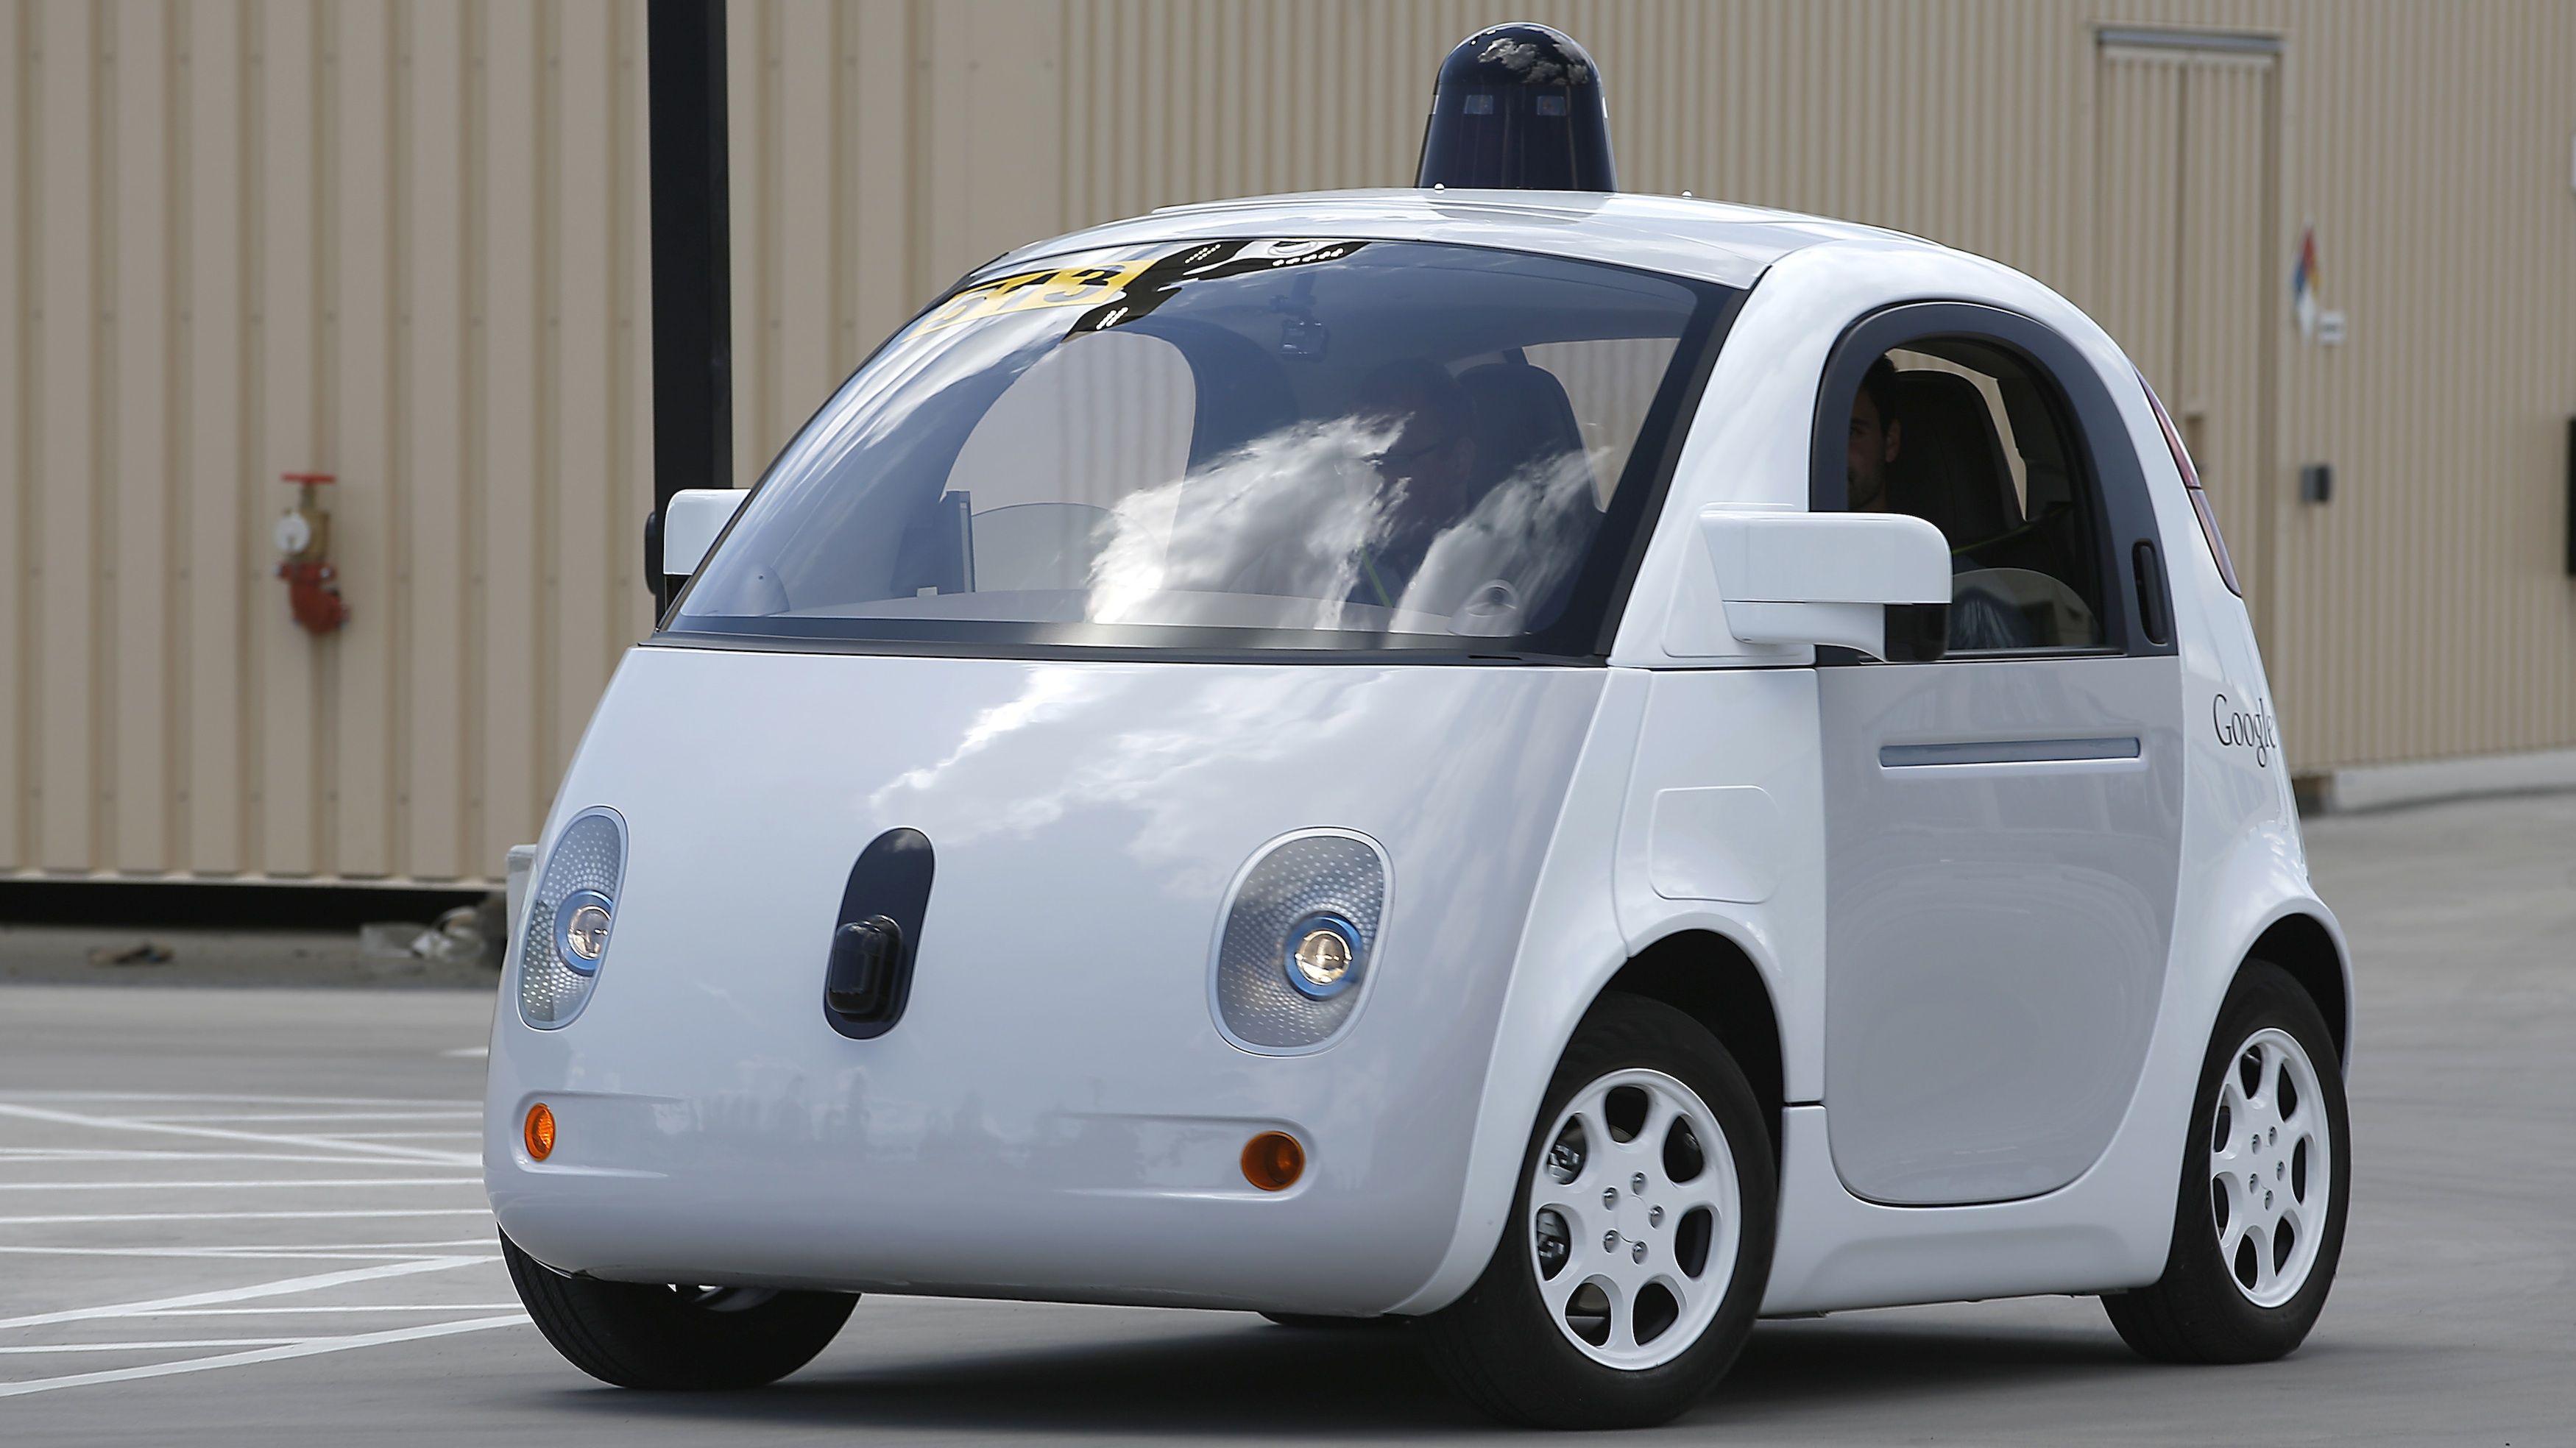 Latest Innovations Technology | Google Driverless Car